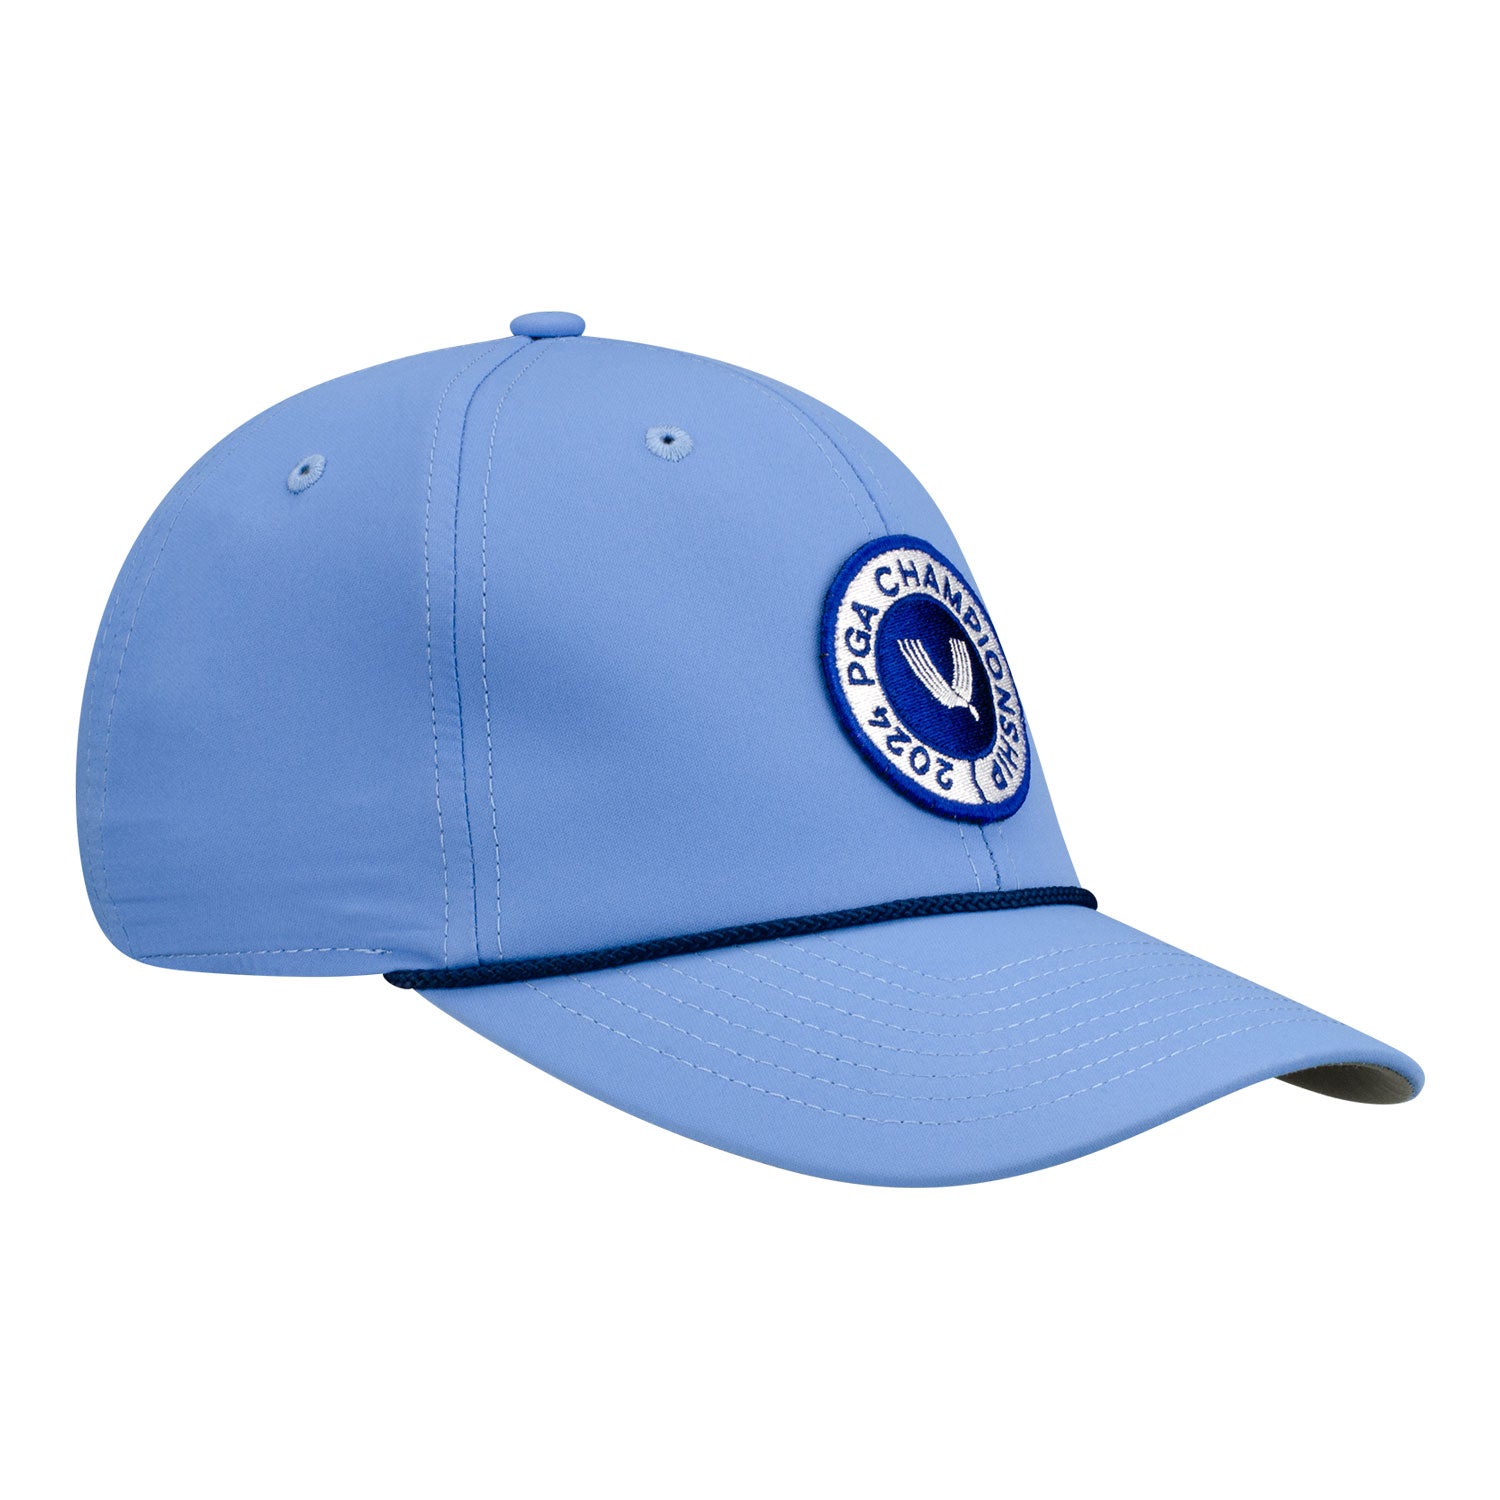 Authentic PGA Championship Hats - PGA Shop